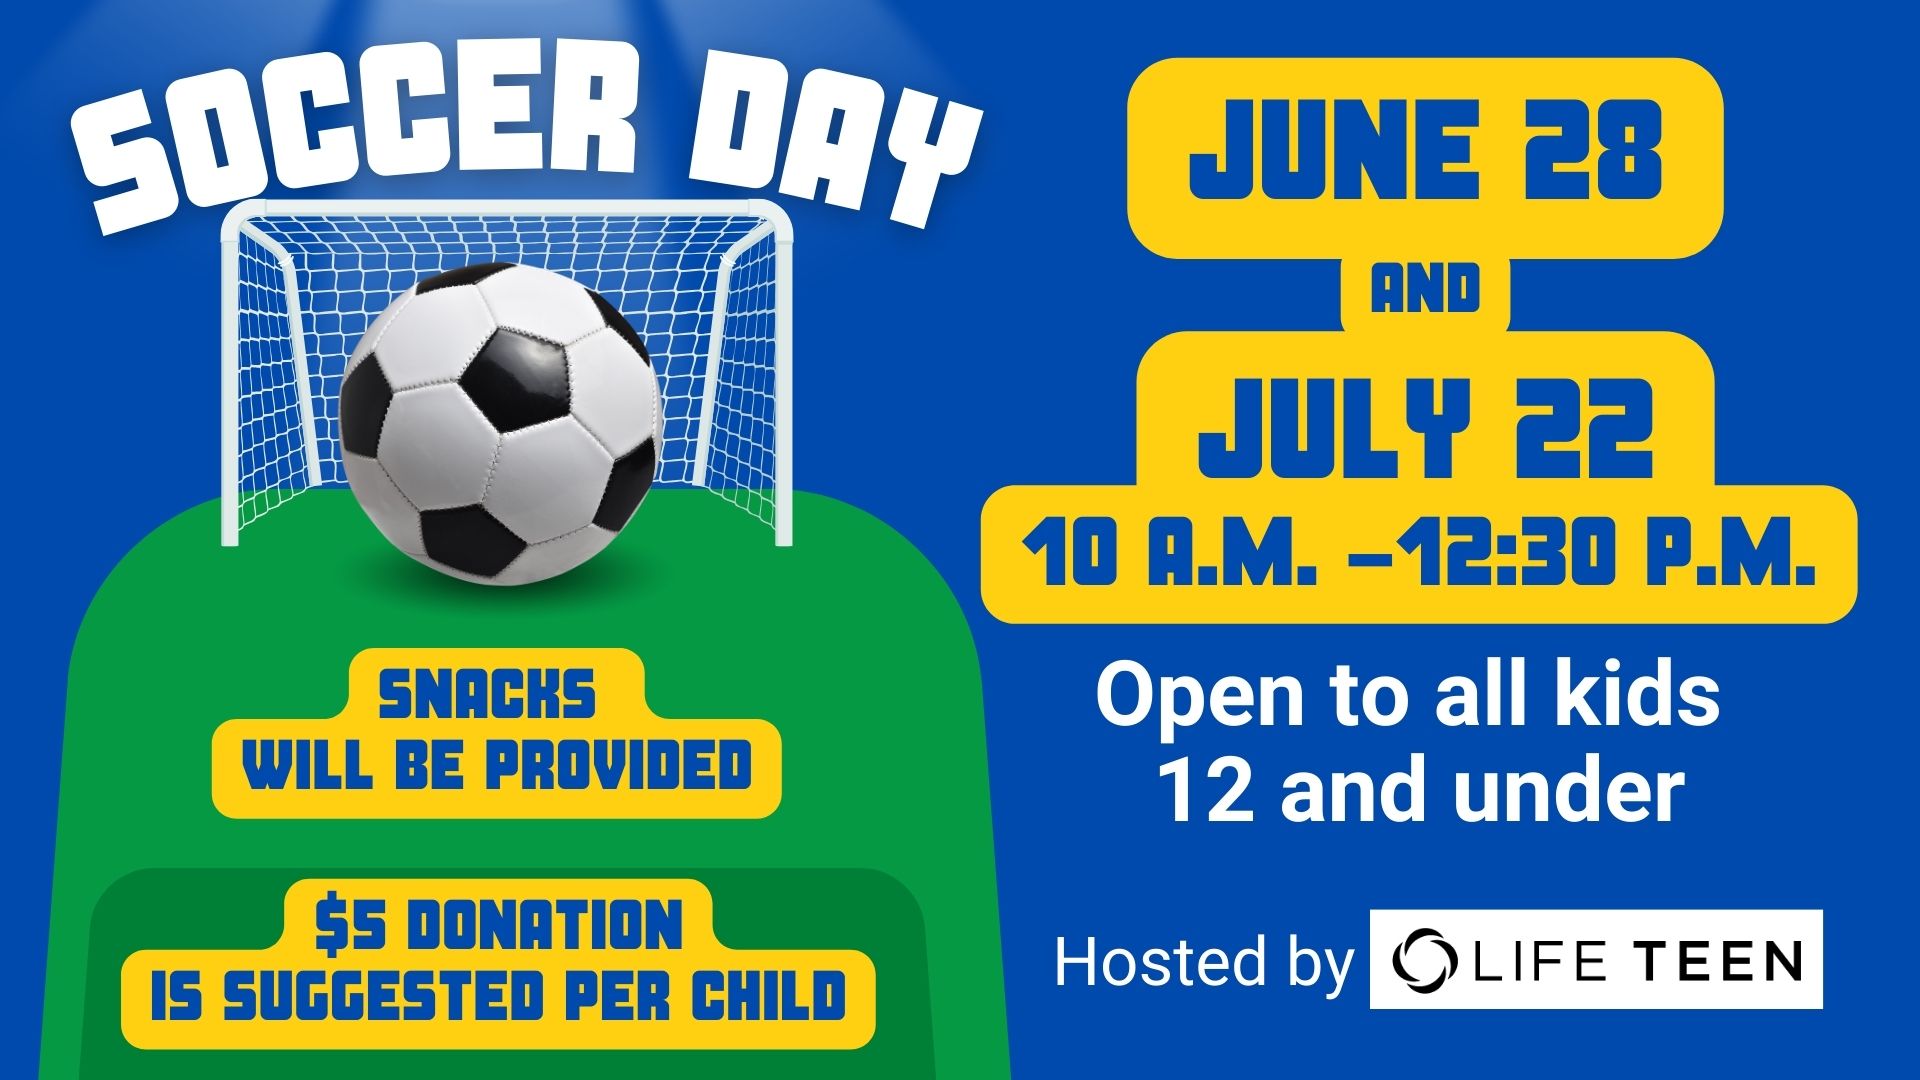 Kids Soccer Day for Screens